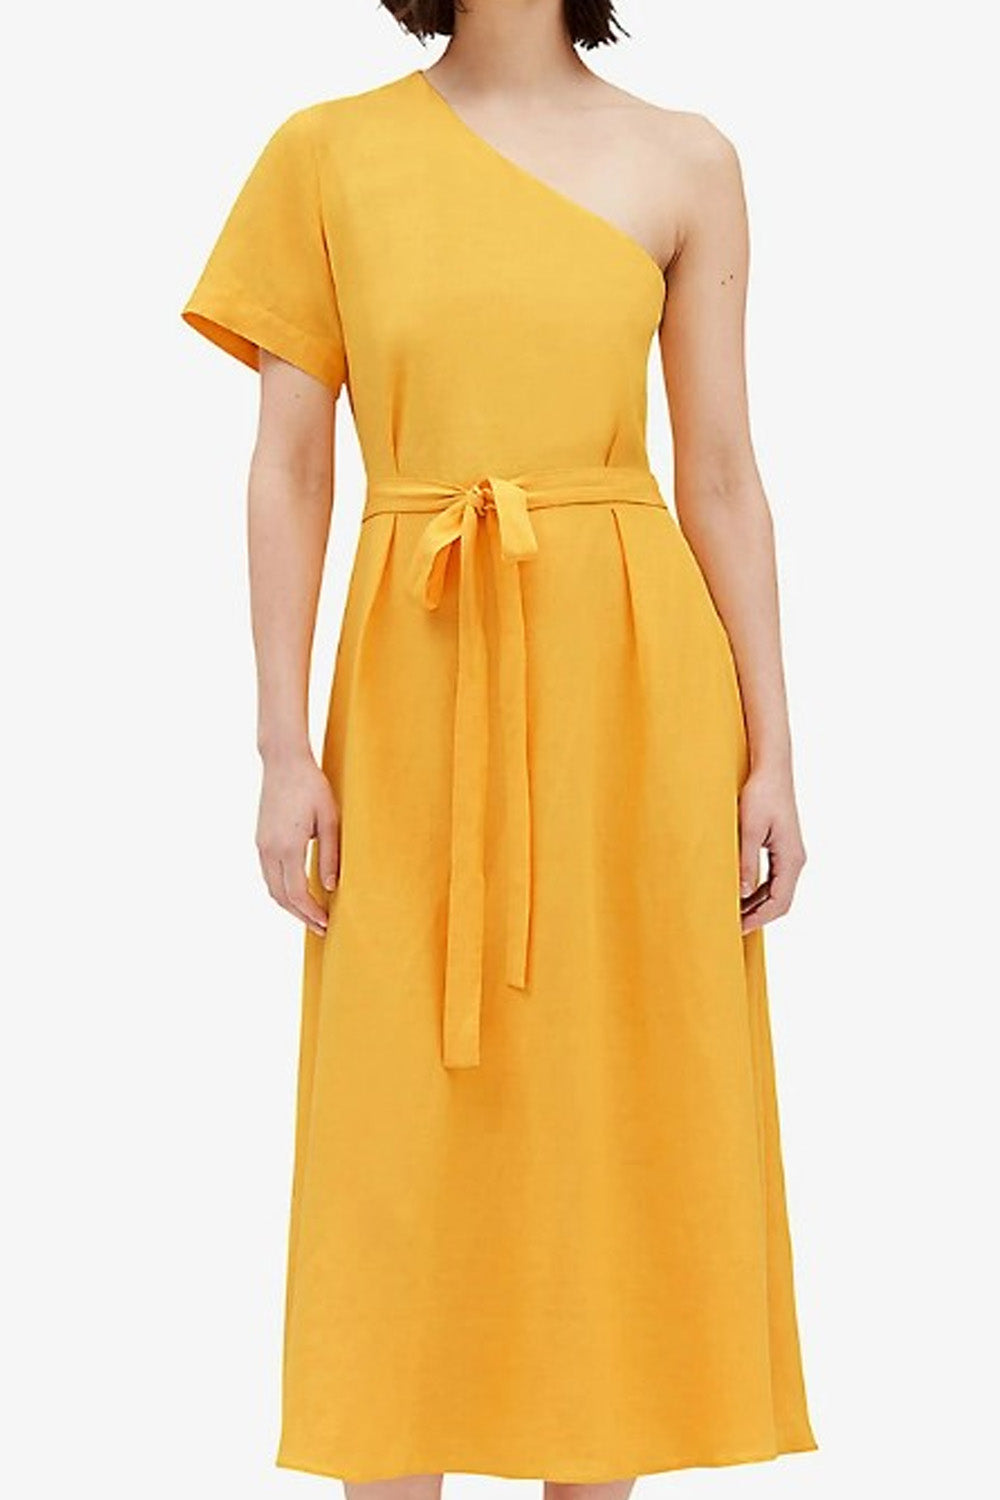 Quintessential yellow Dress